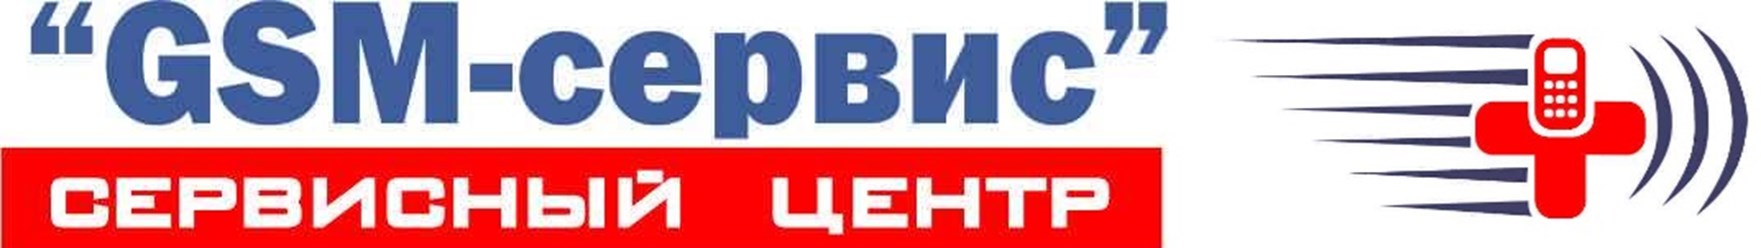 GSM-Сервис ИП Пименов Е. В.  - в Хабаровске 